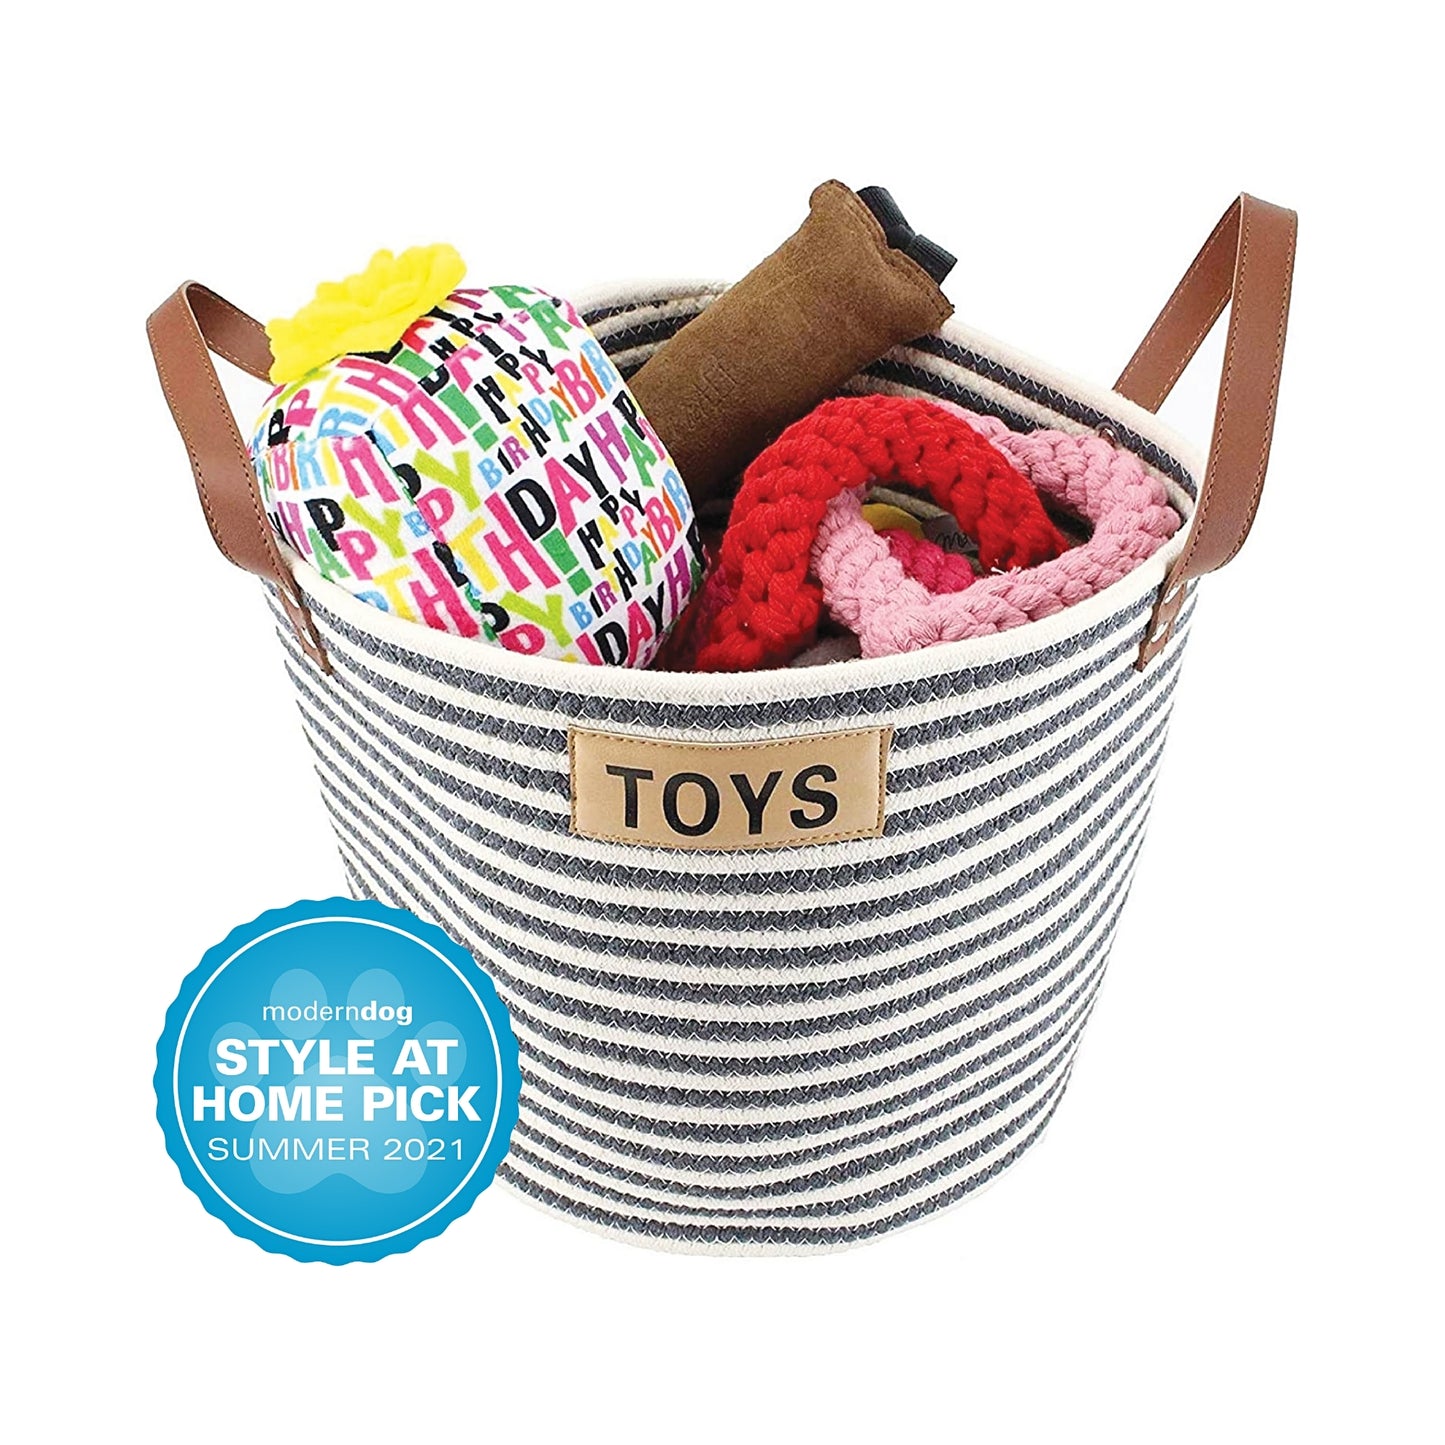 Midlee Cotton Rope Pet Toy Storage Basket